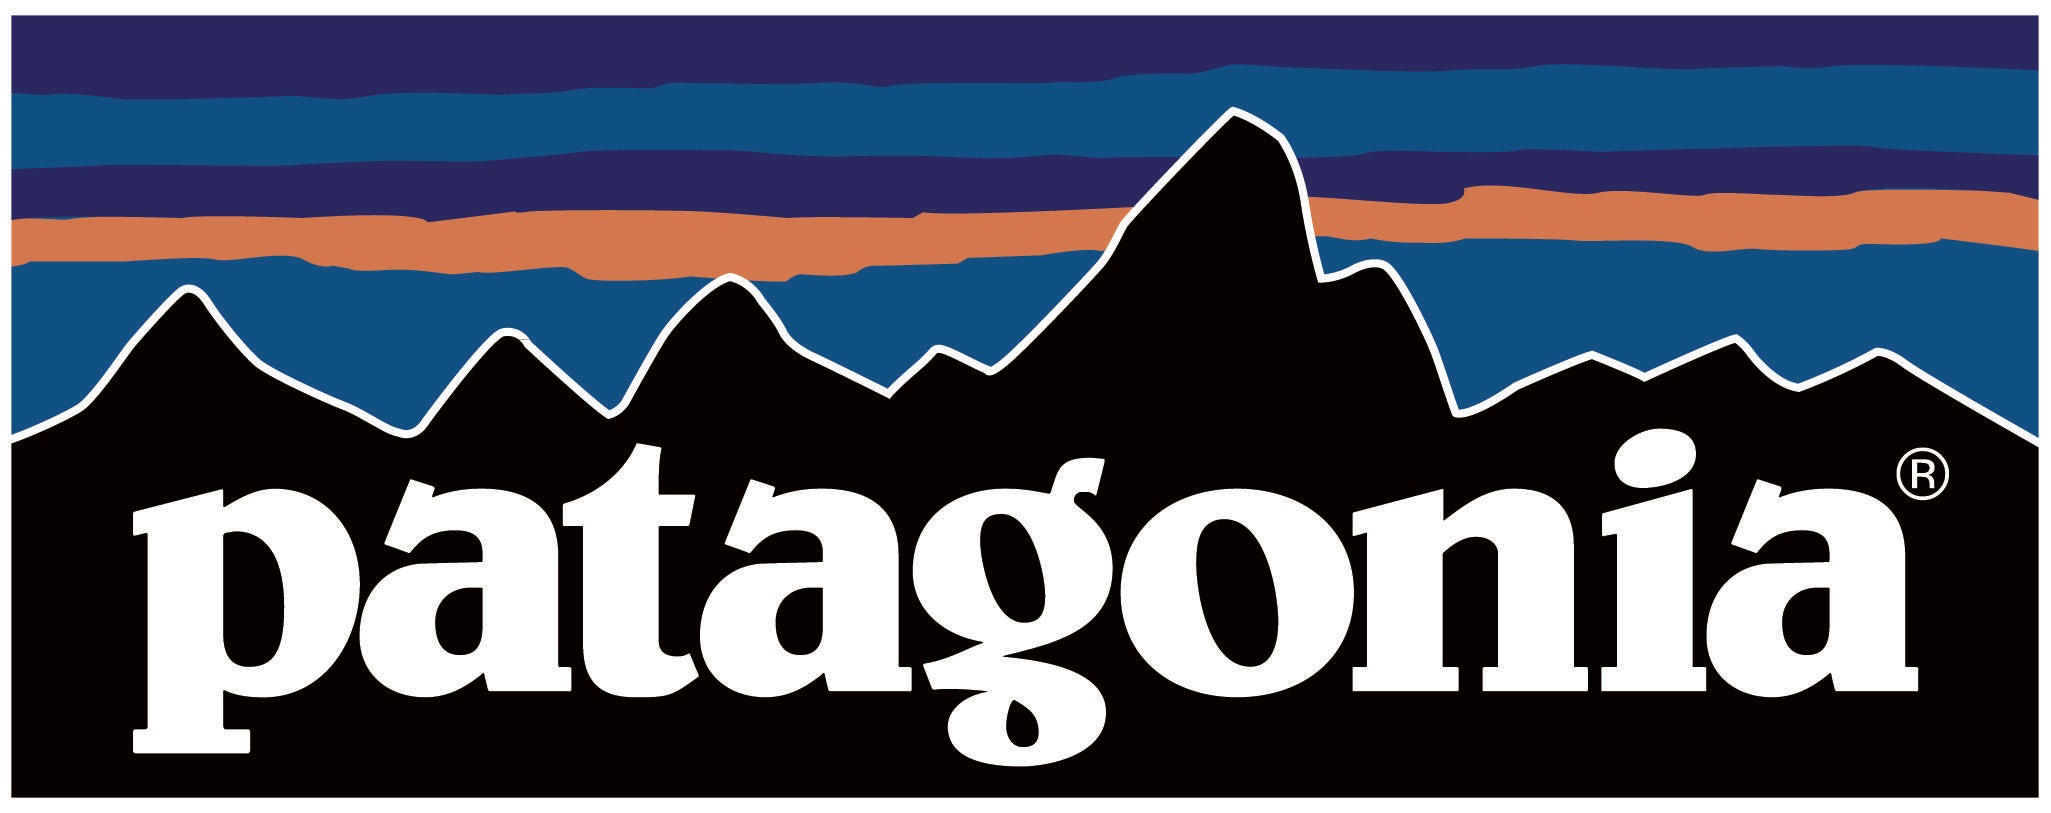 Patagonia Logo, Symbol, Meaning, History, PNG, Brand | lacienciadelcafe ...